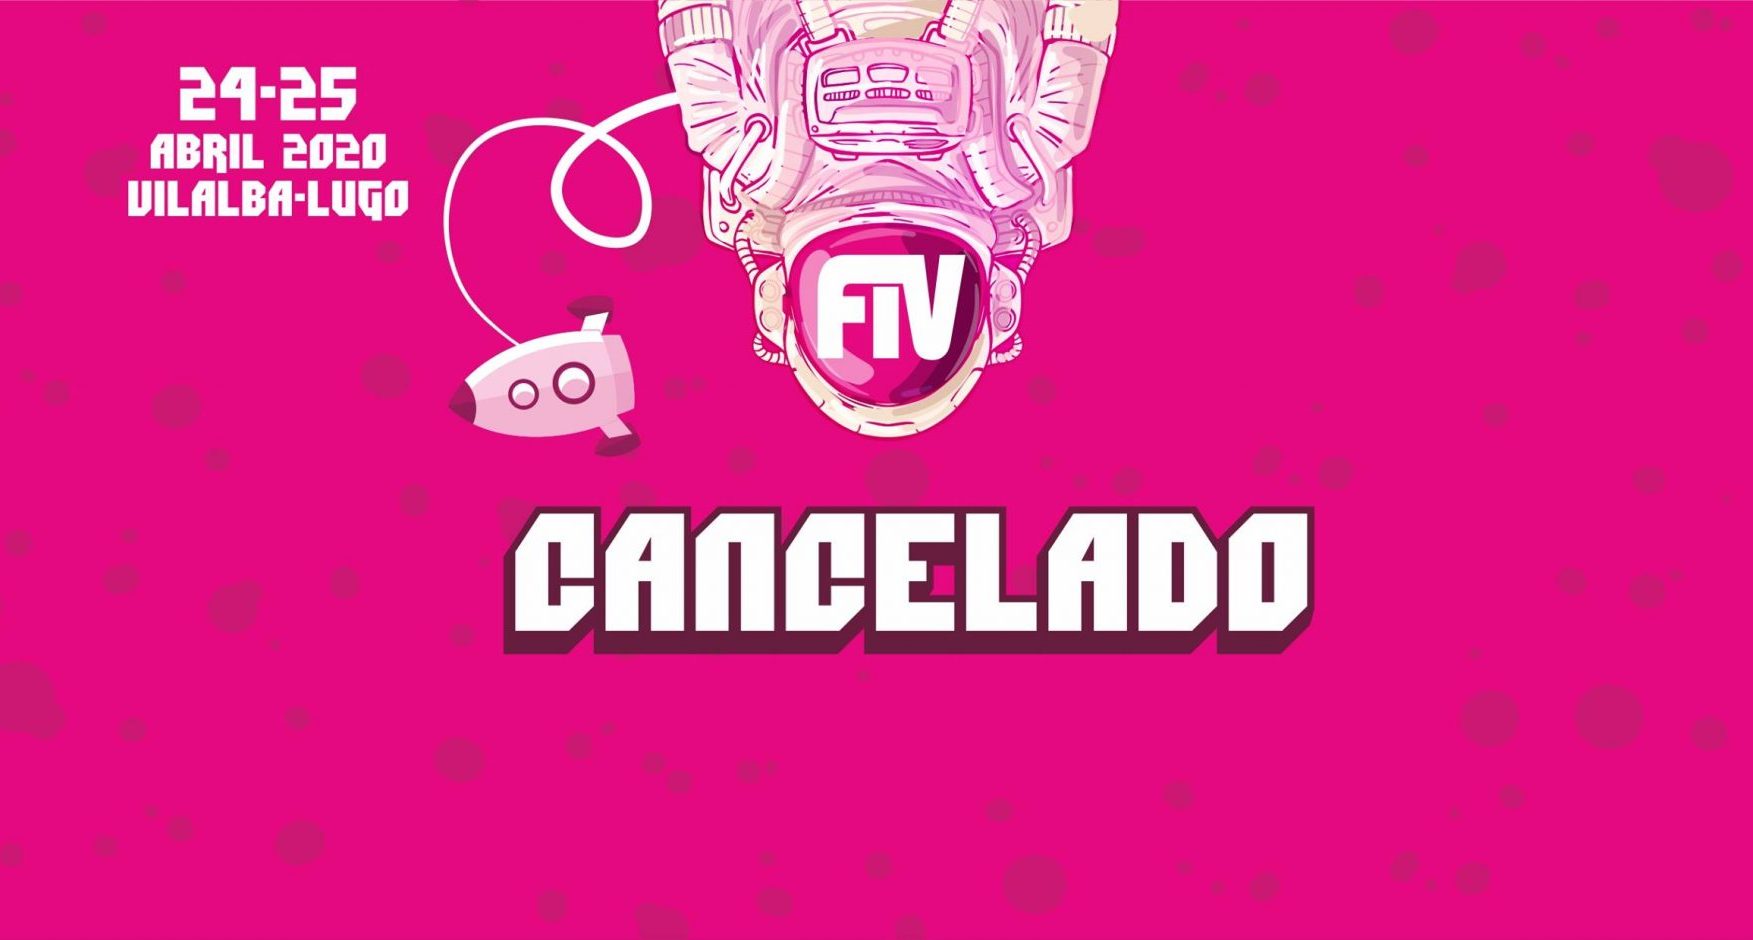 FIV de Vilalba cancela